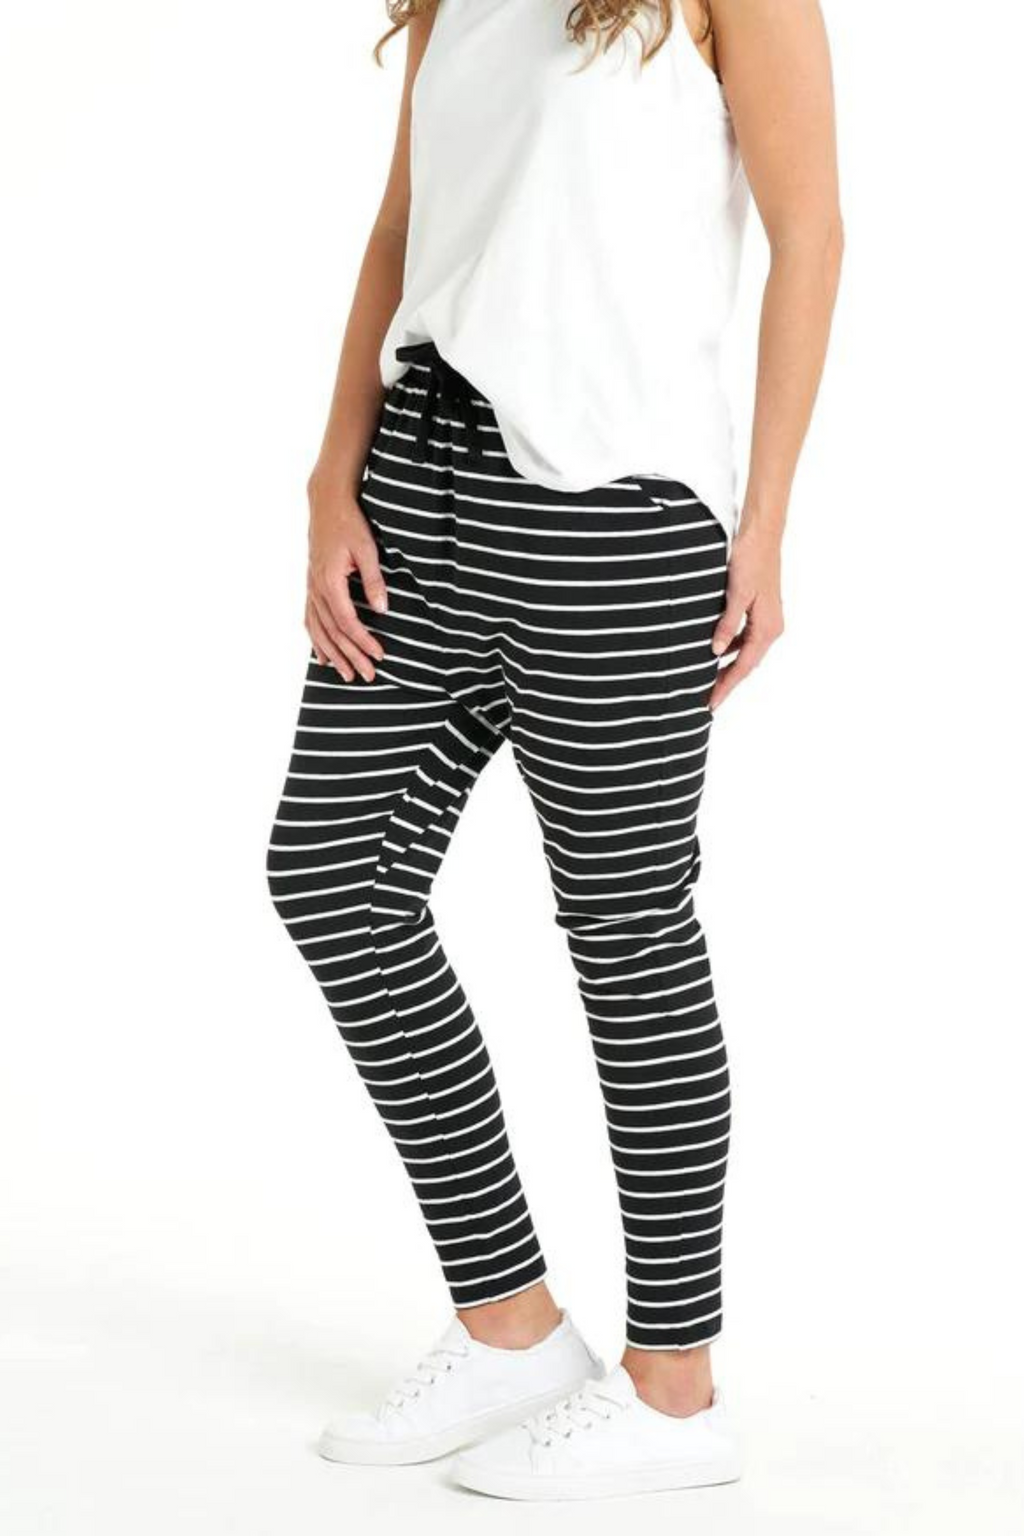 JADE PANT- Black/White Stripe